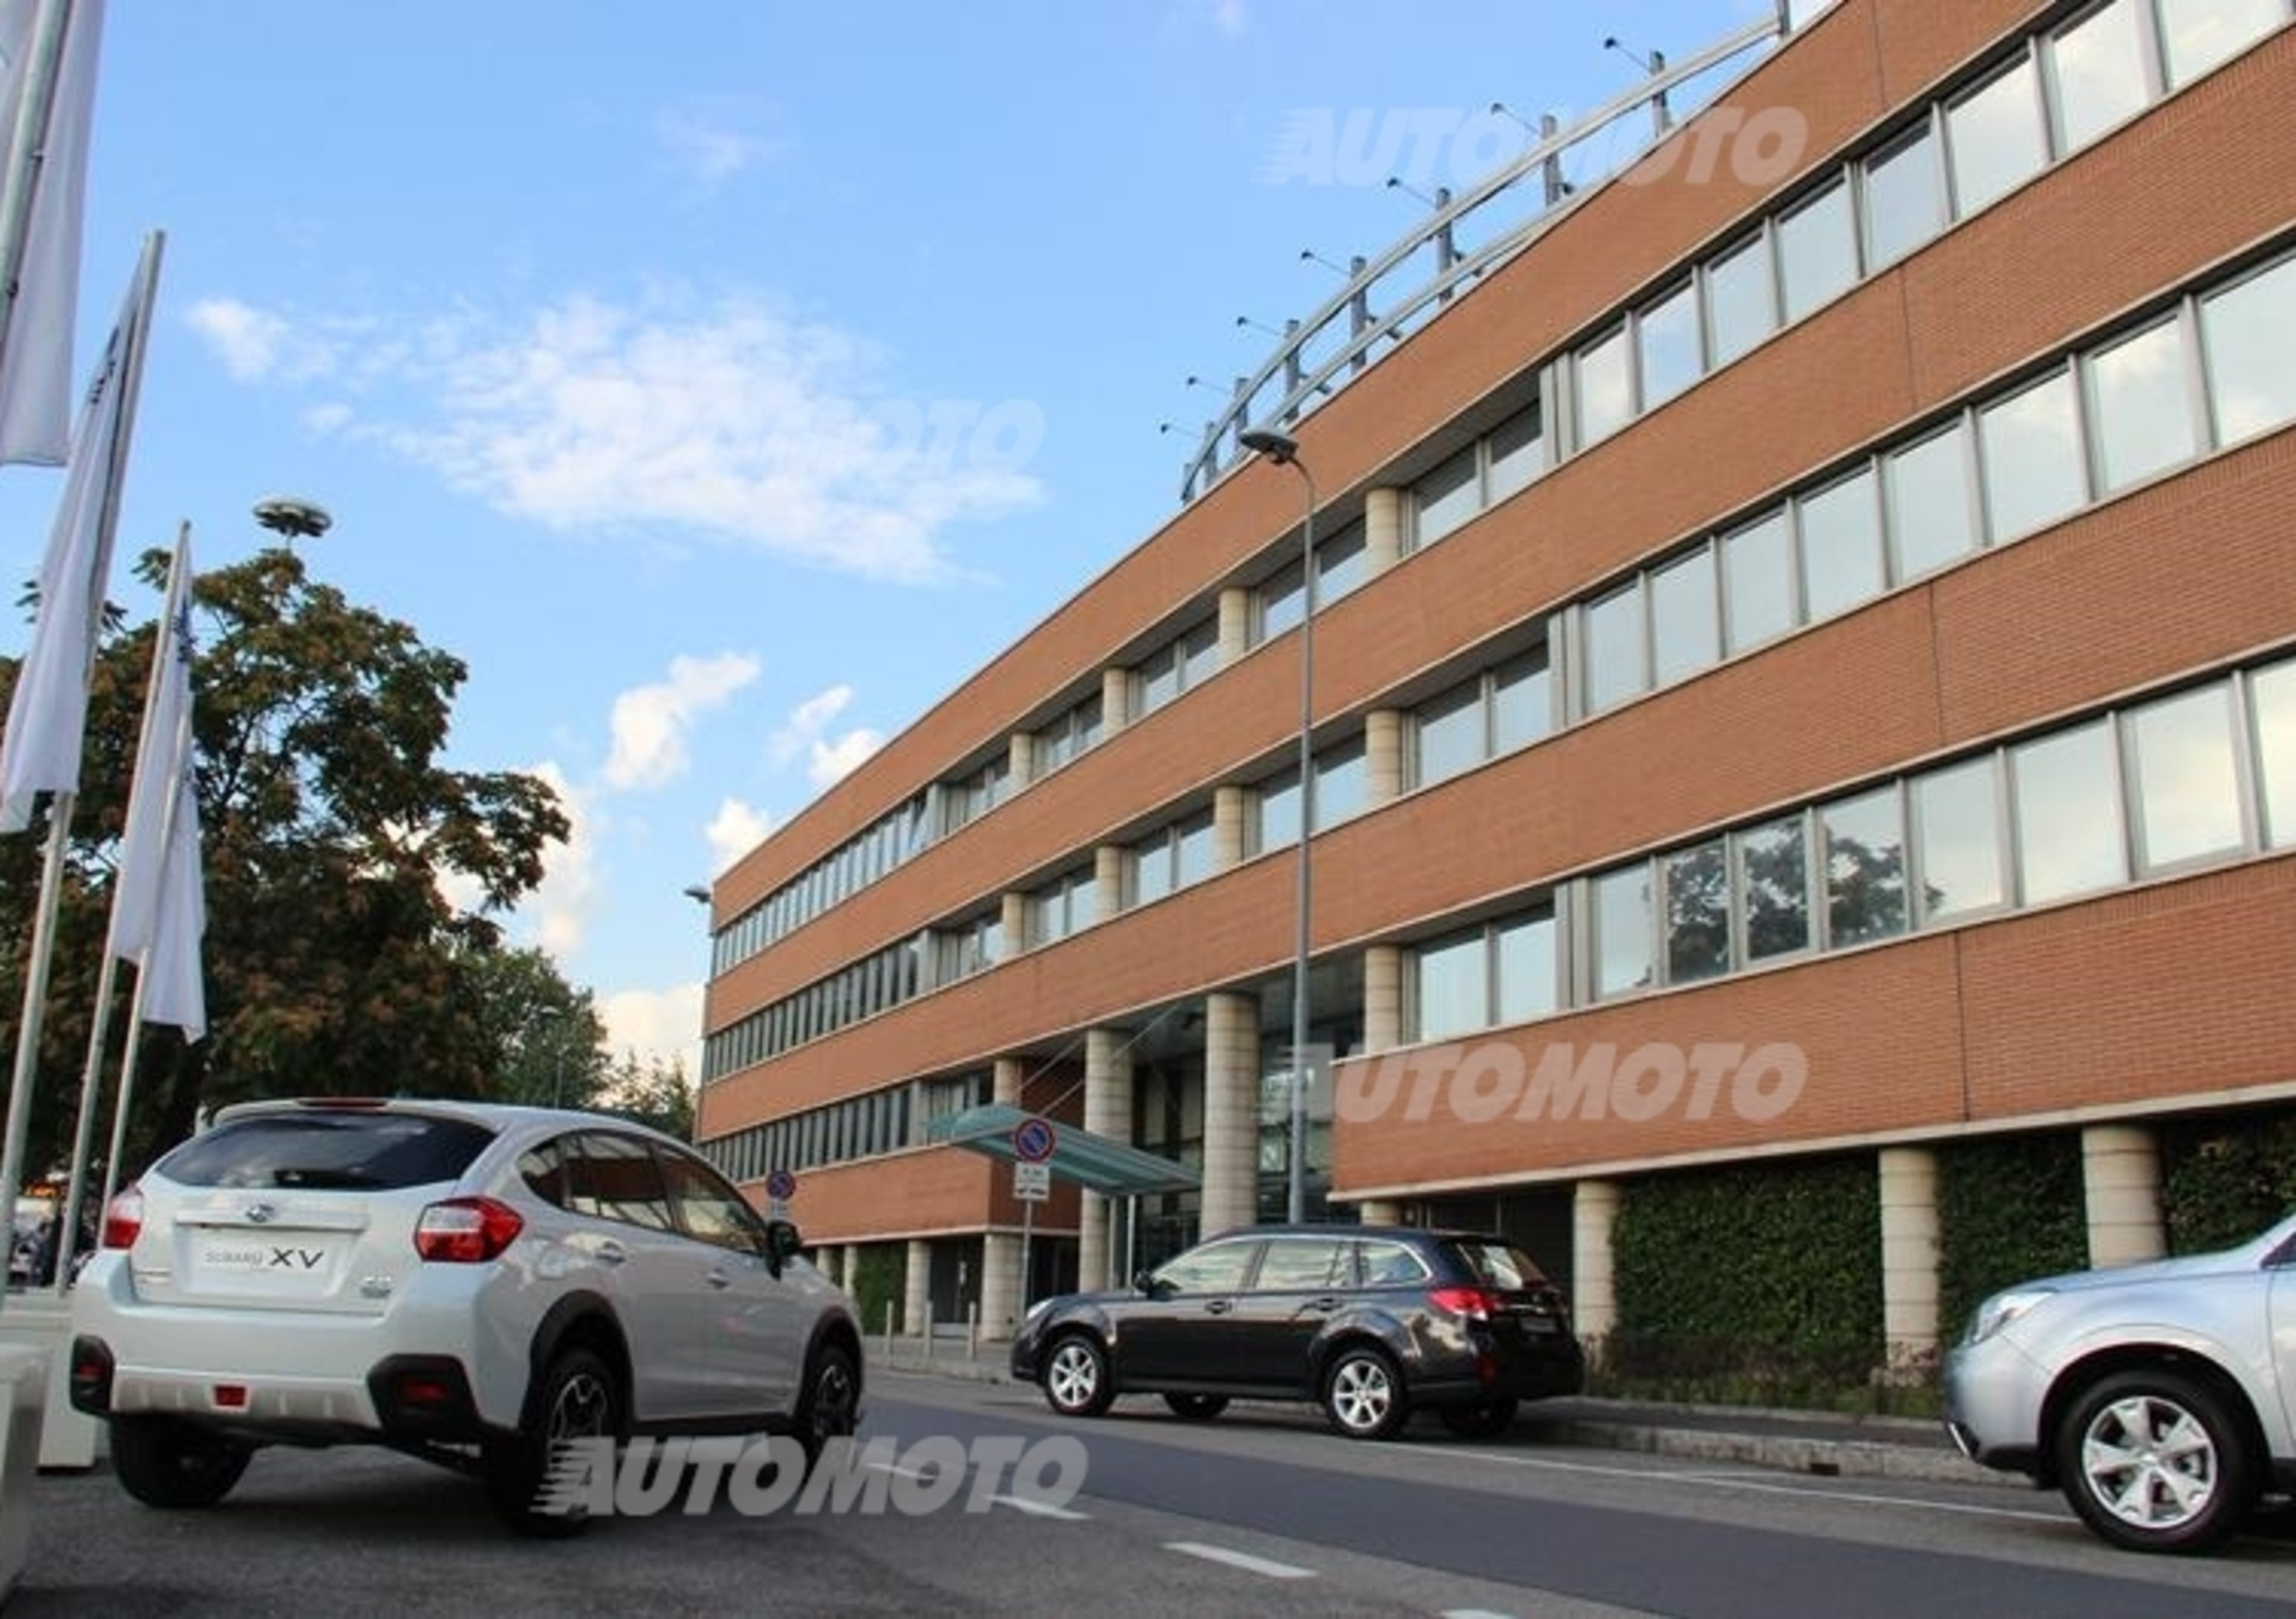 Subaru: inaugurata la nuova sede italiana a Milano